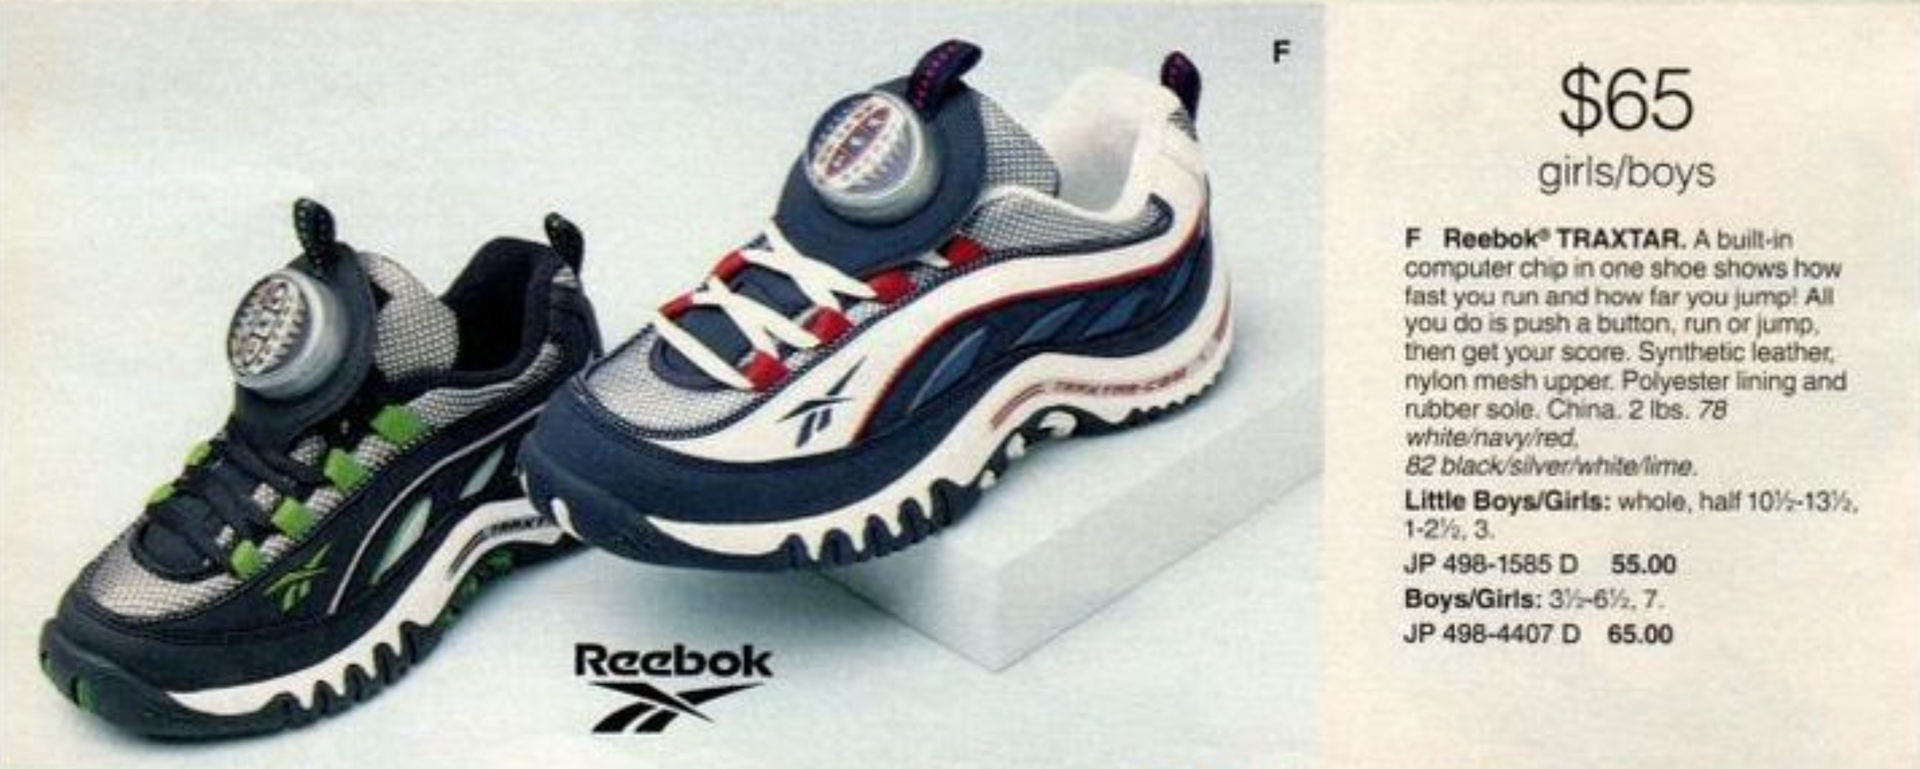 JCPenney Catalog, Reebok sneakers advertisement